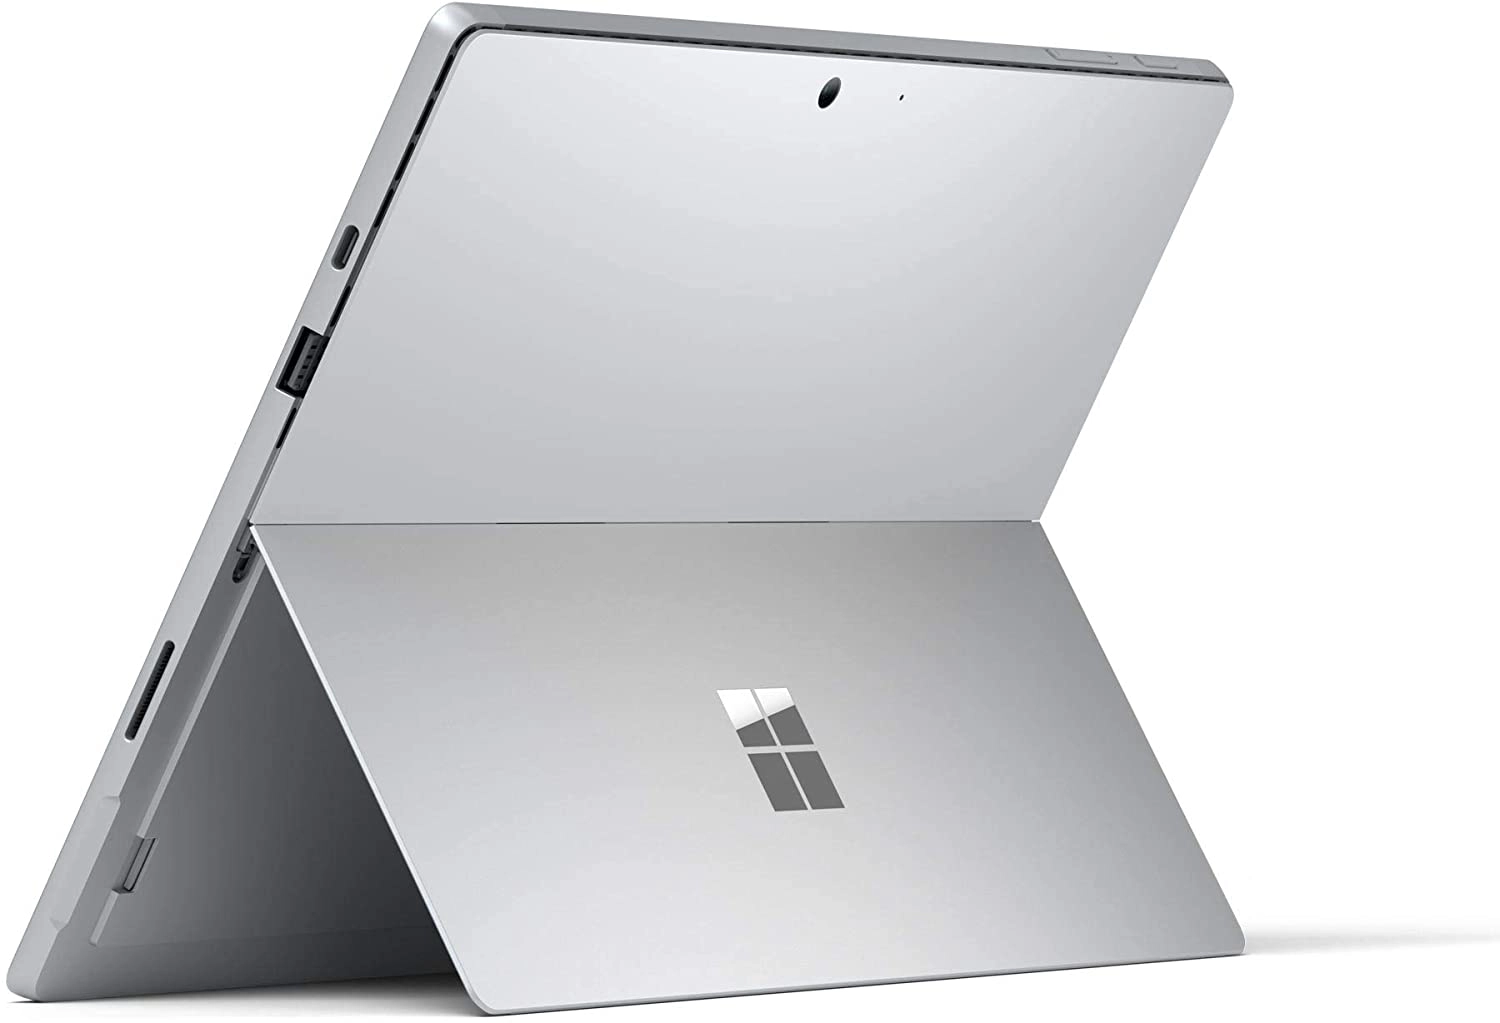 Microsoft VAT-00003 laptop image